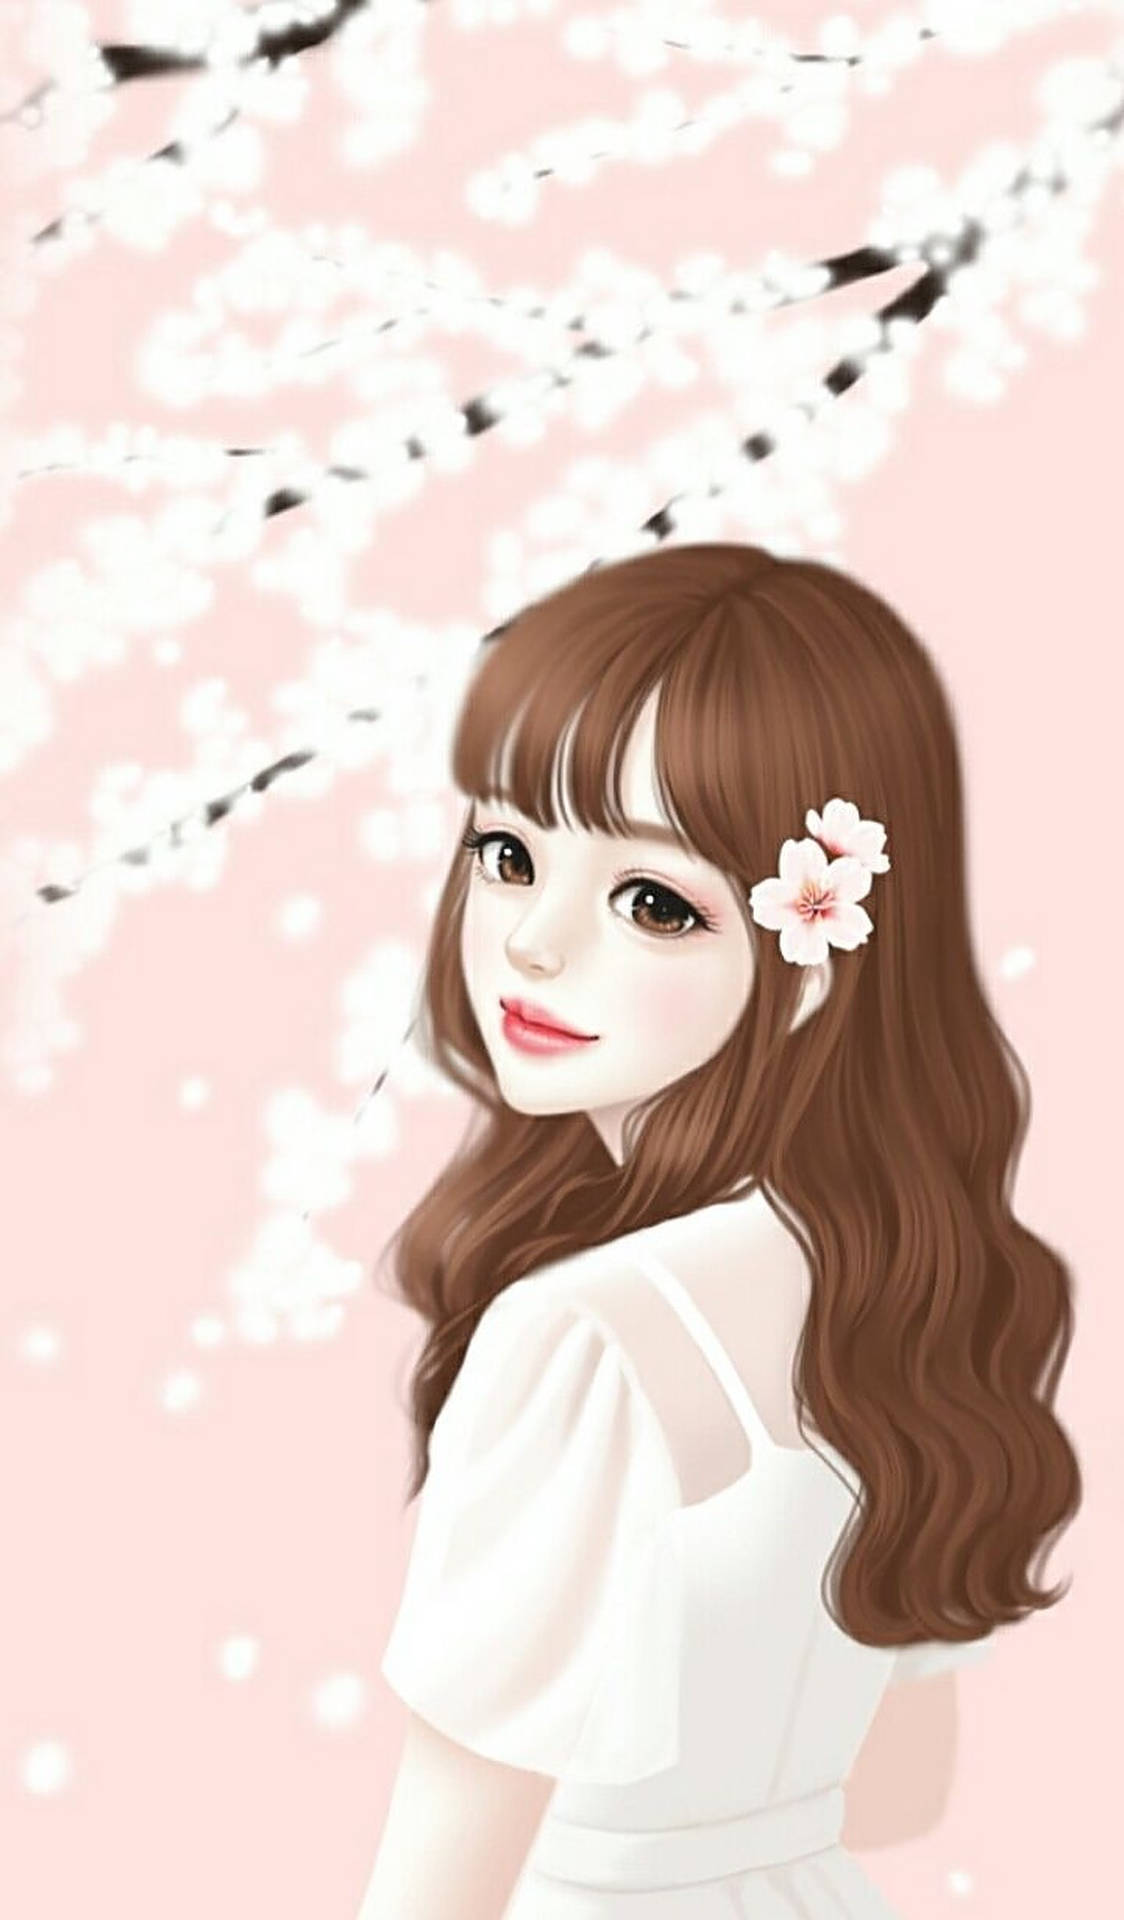 Cute Cherry Blossom Profile Picture Background